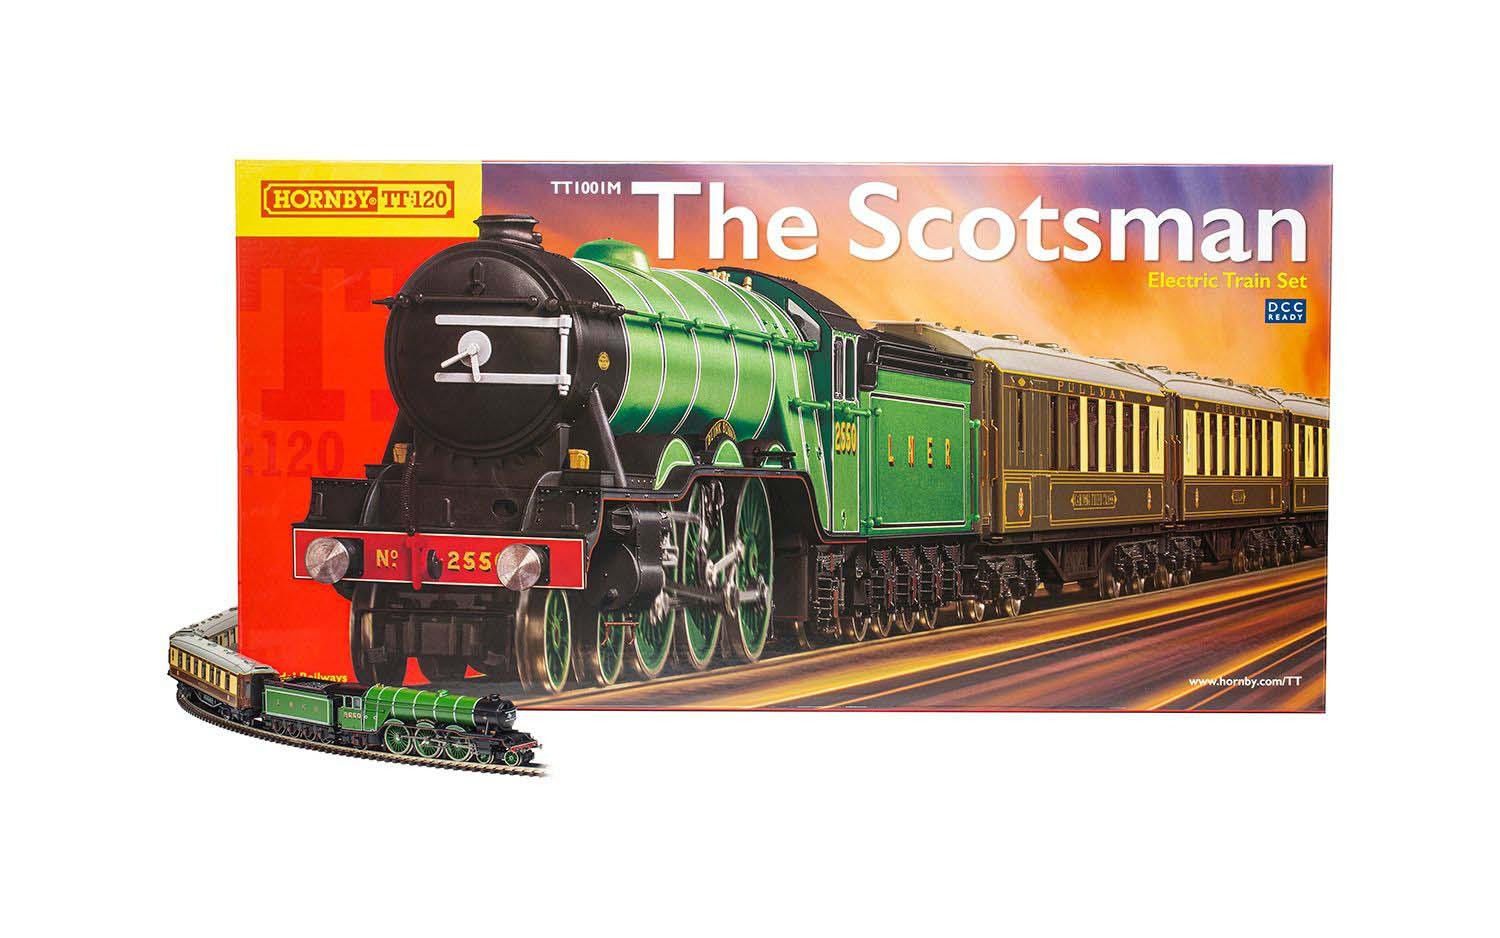 The Scotsman Train Set